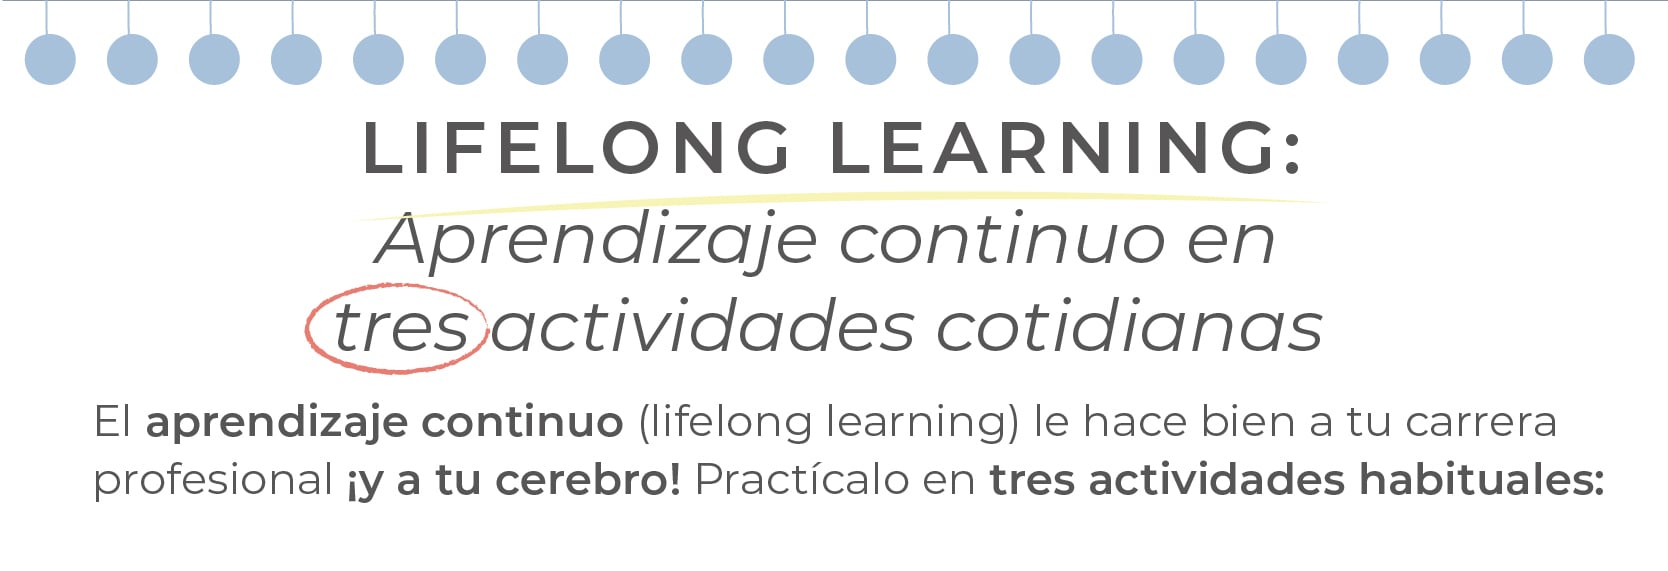 lifelong-learning-aprendizaje-continuo